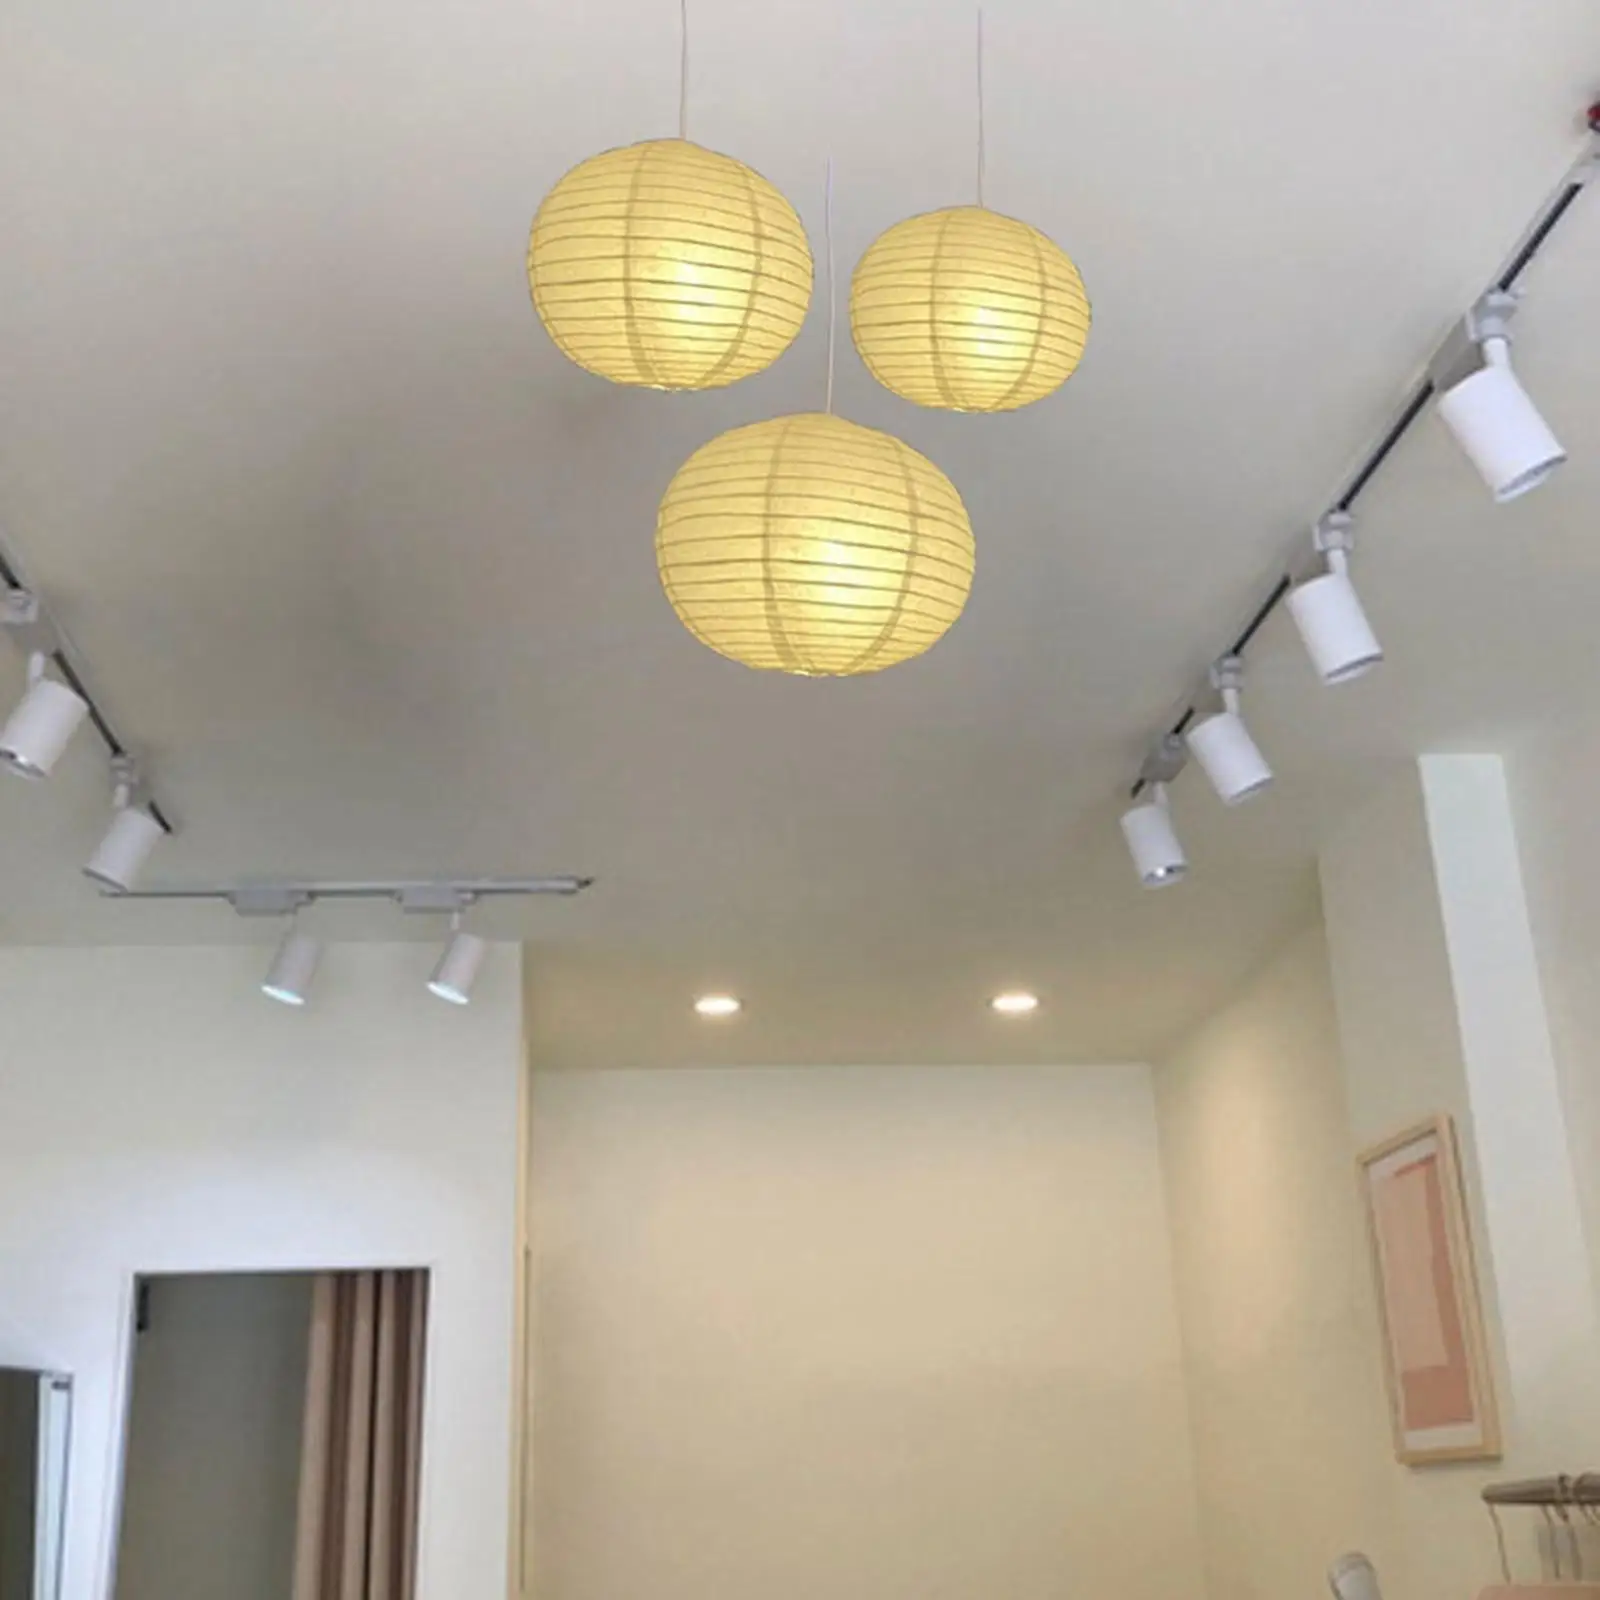 Retro Style Pendant Lamp Shade Ceiling Light Shade Paper Decor Cafe Kitchen